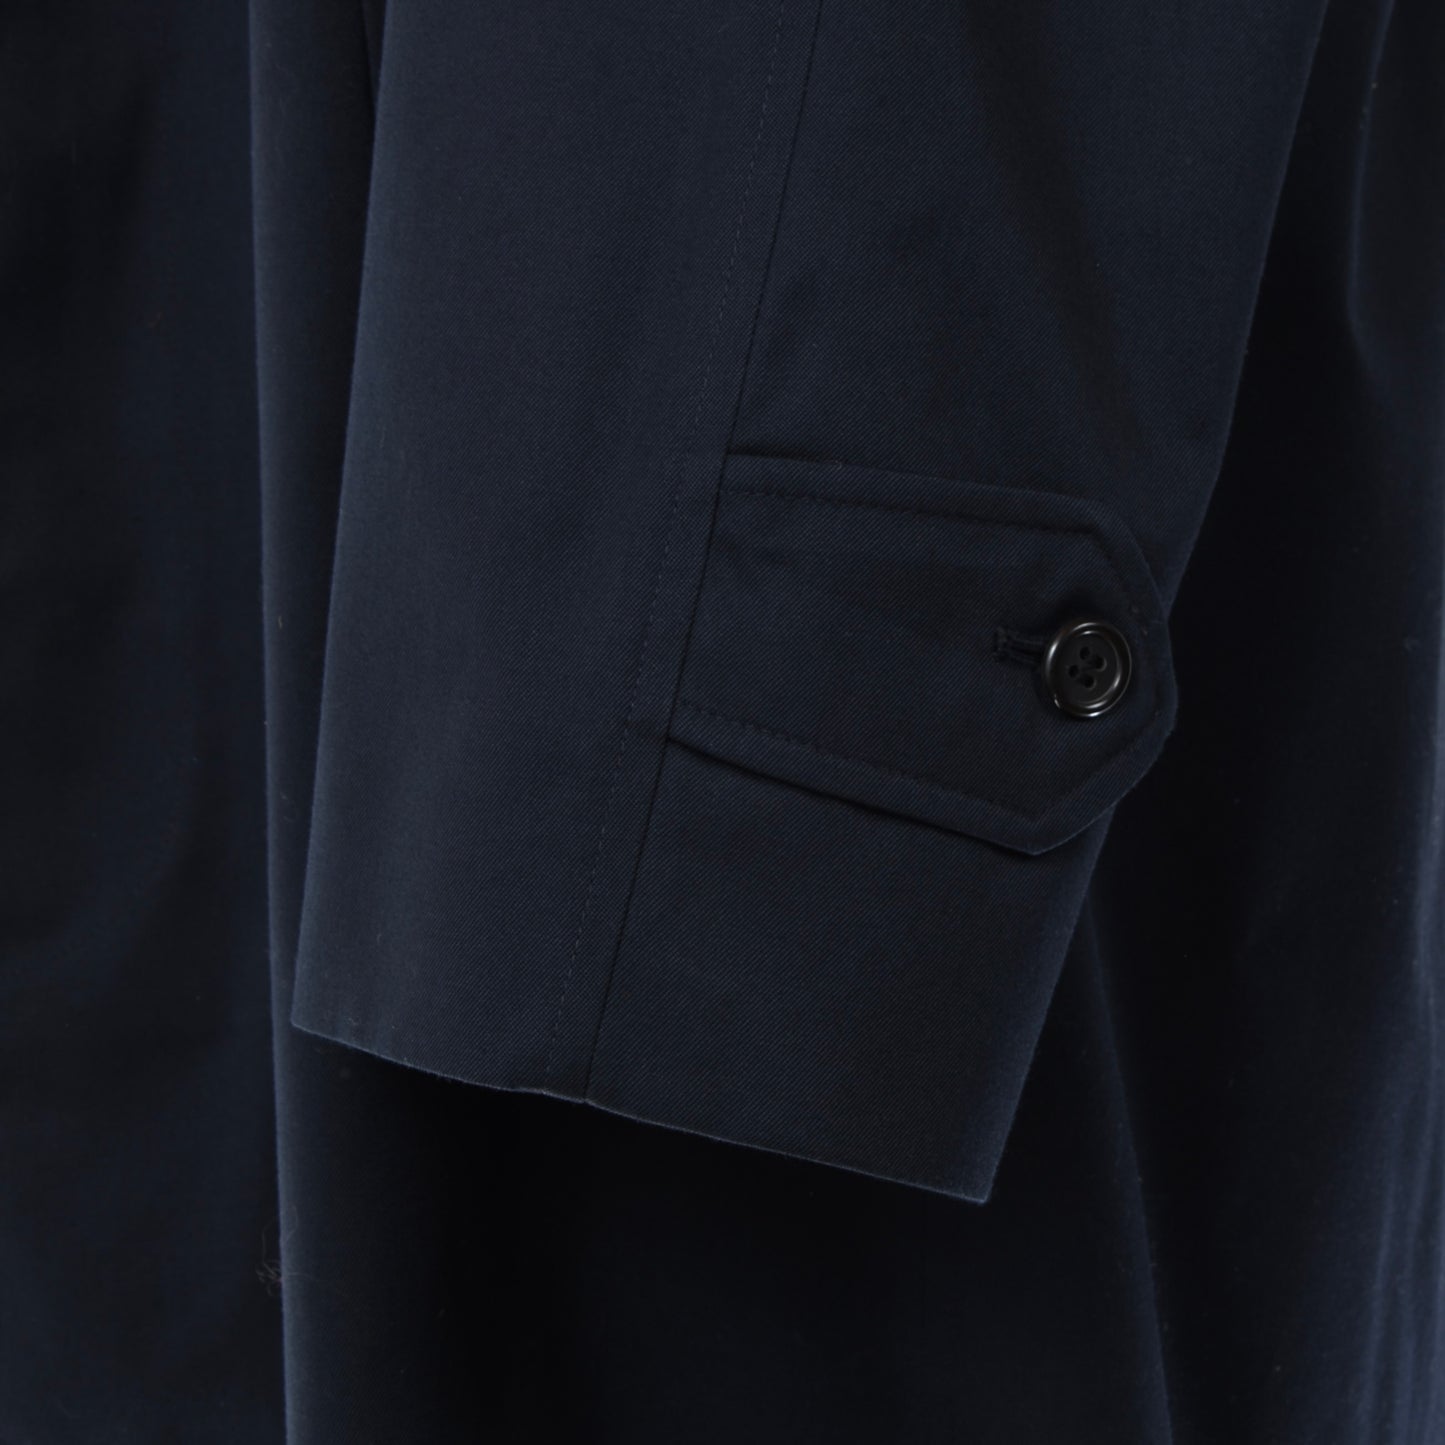 Burberrys Mac/Trench Coat Size 48 - Navy Blue